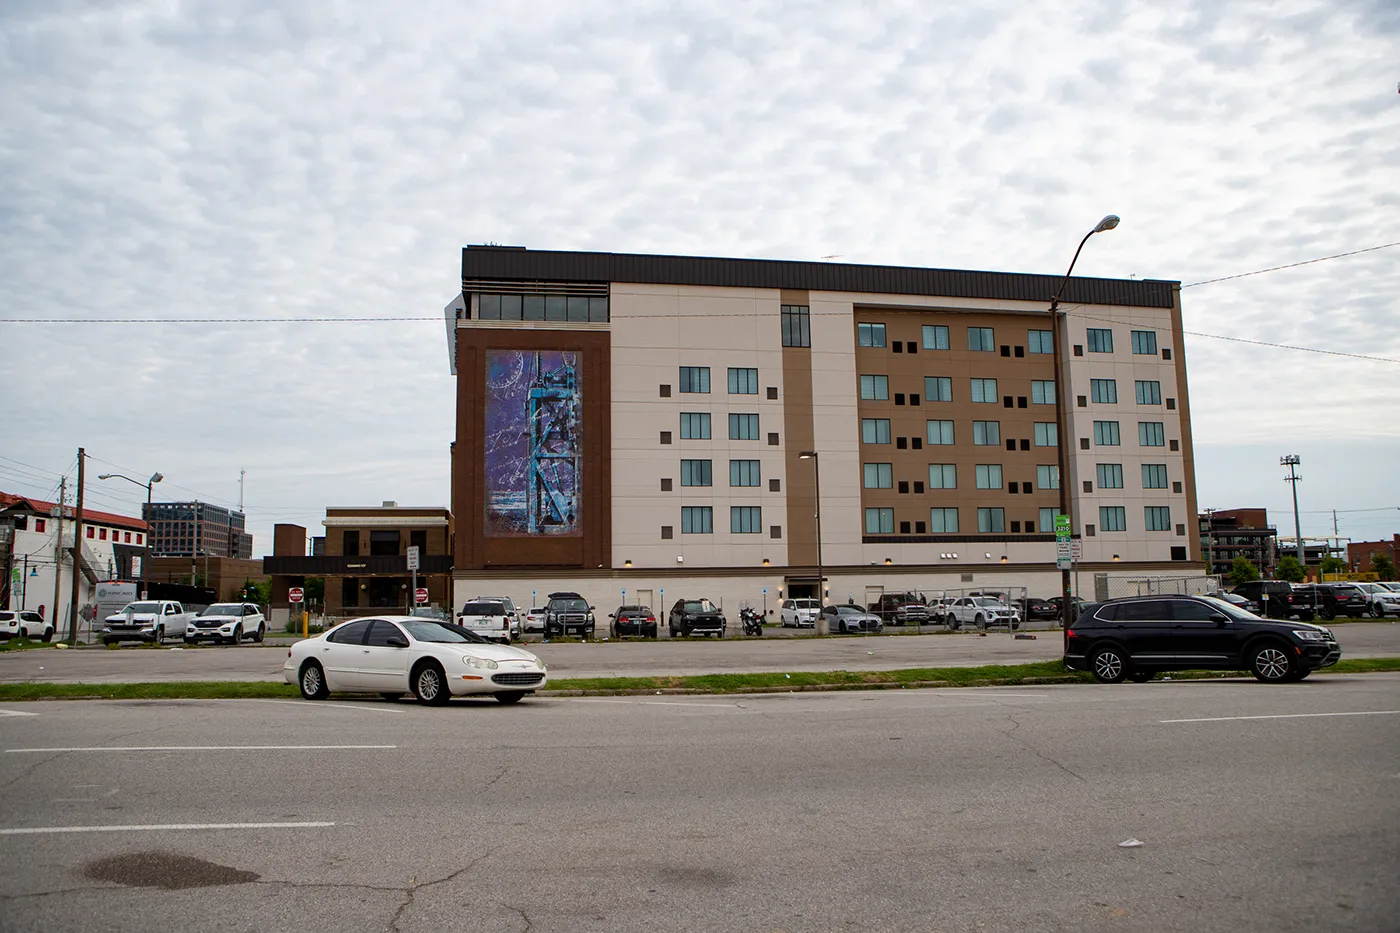 Hotel Indigo in Tulsa, Oklahoma